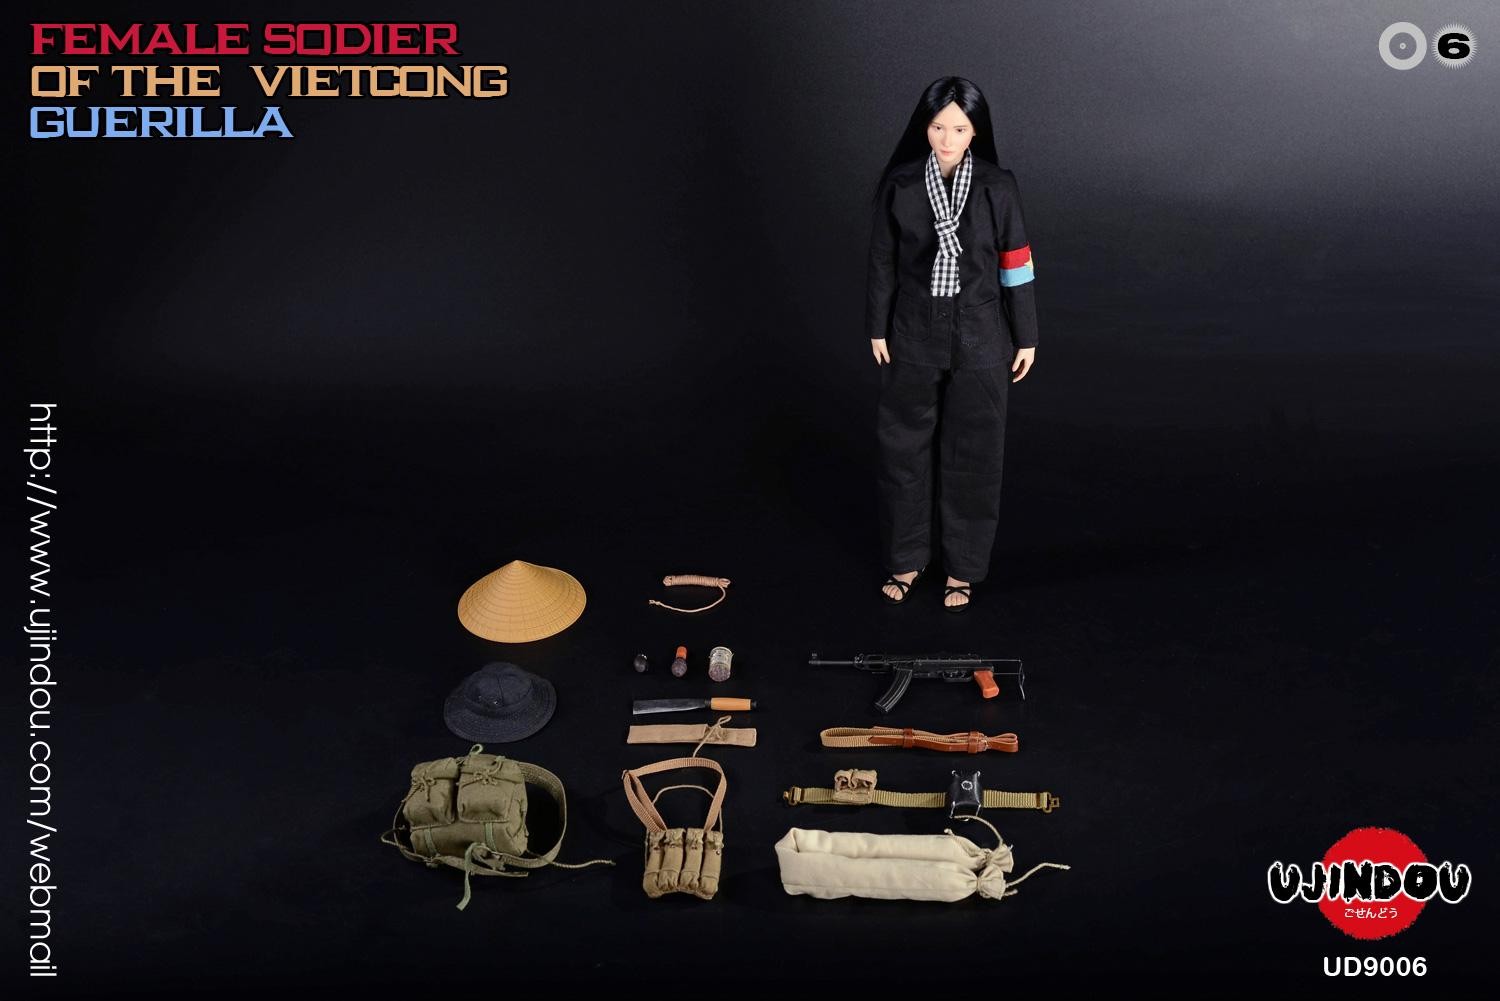 Ujindou 1/6 Scale Vietnam Vietcong Female Guerrilla Soldier UD9006